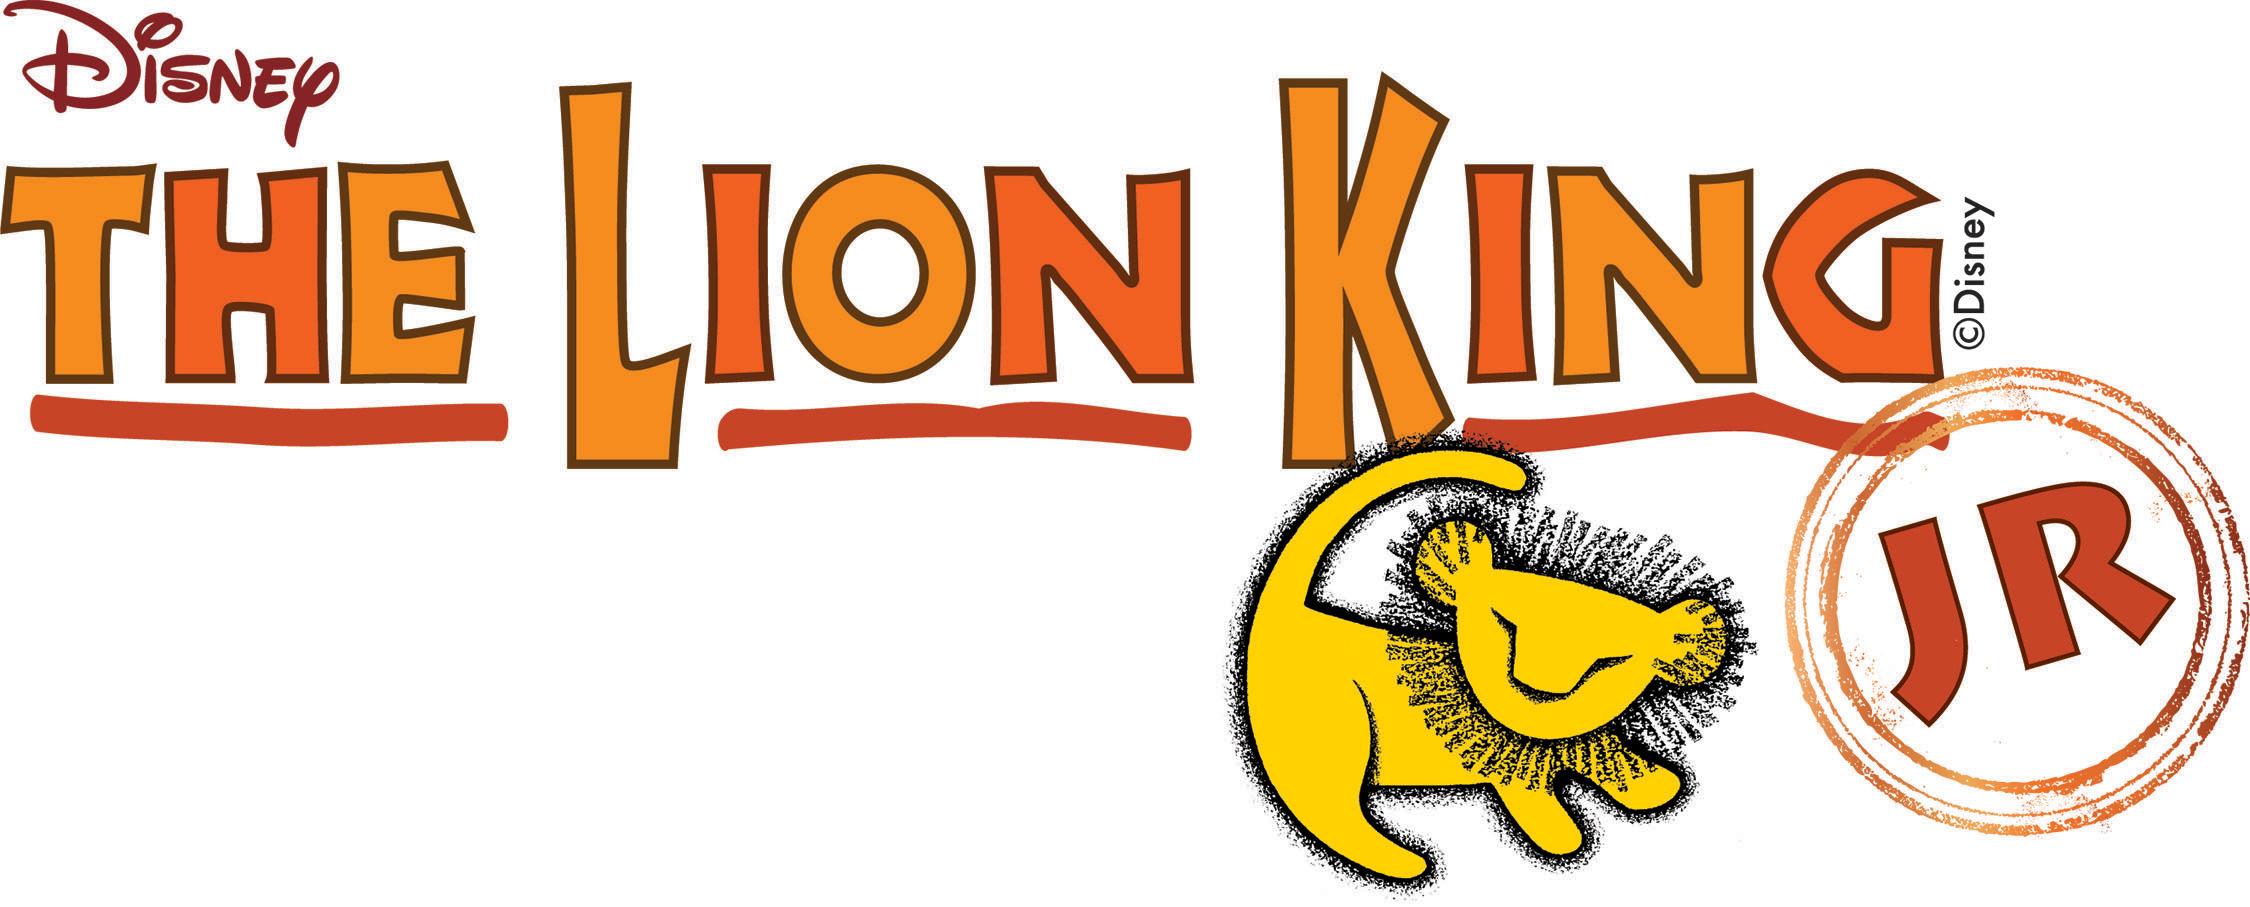 Disney The Lion King Logo - Disney's The Lion King Jr. - Sierra 2